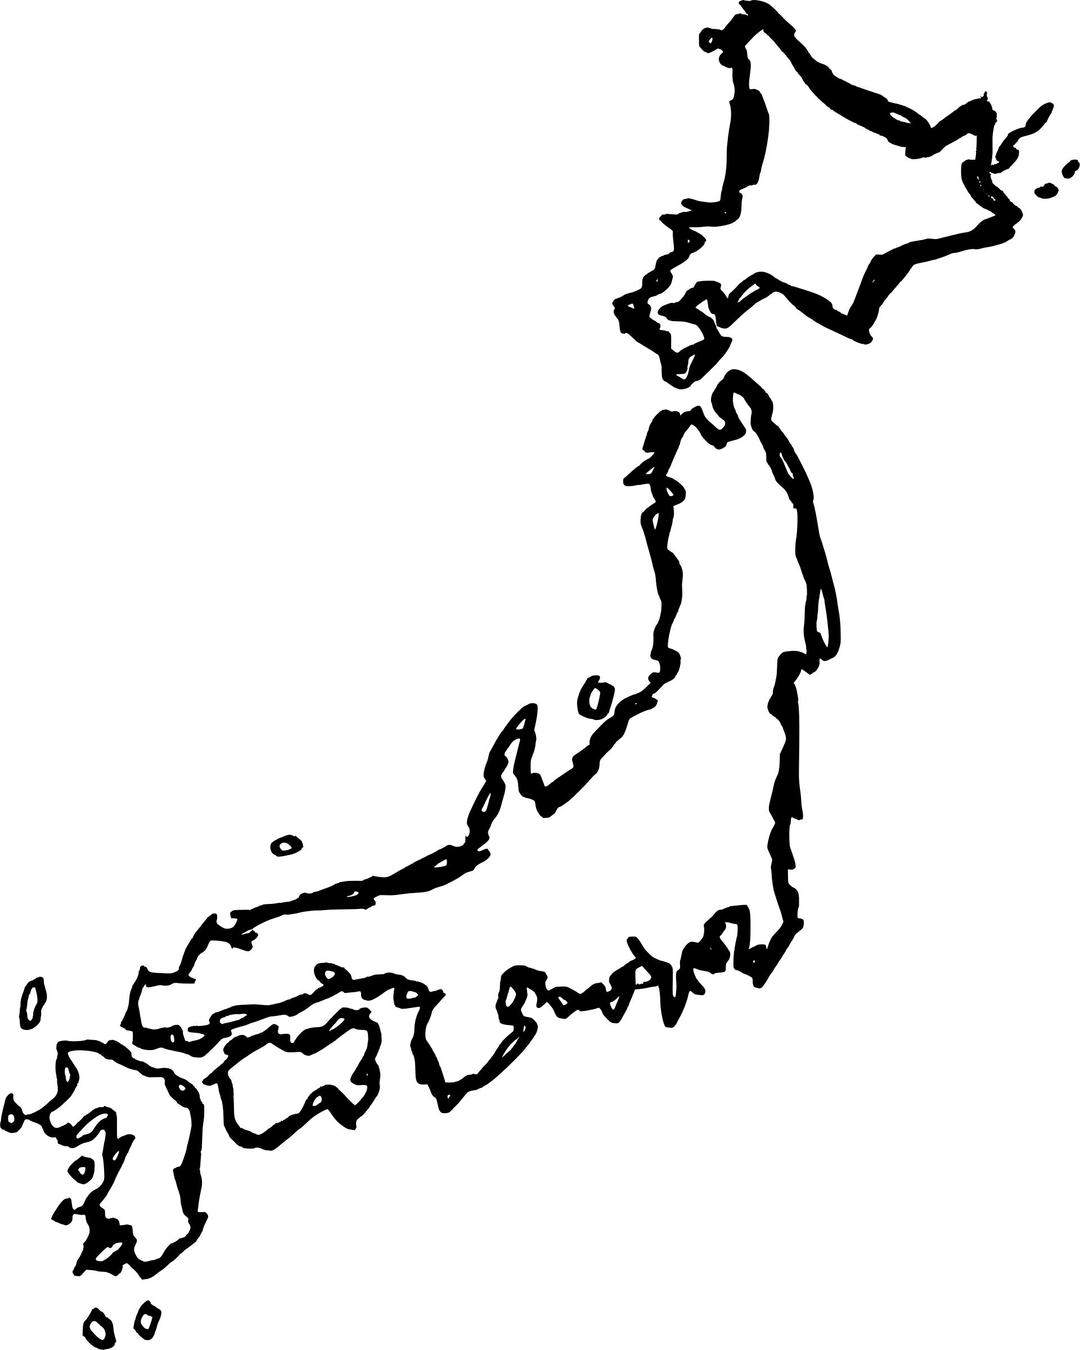 Drawn Map of Japan png transparent